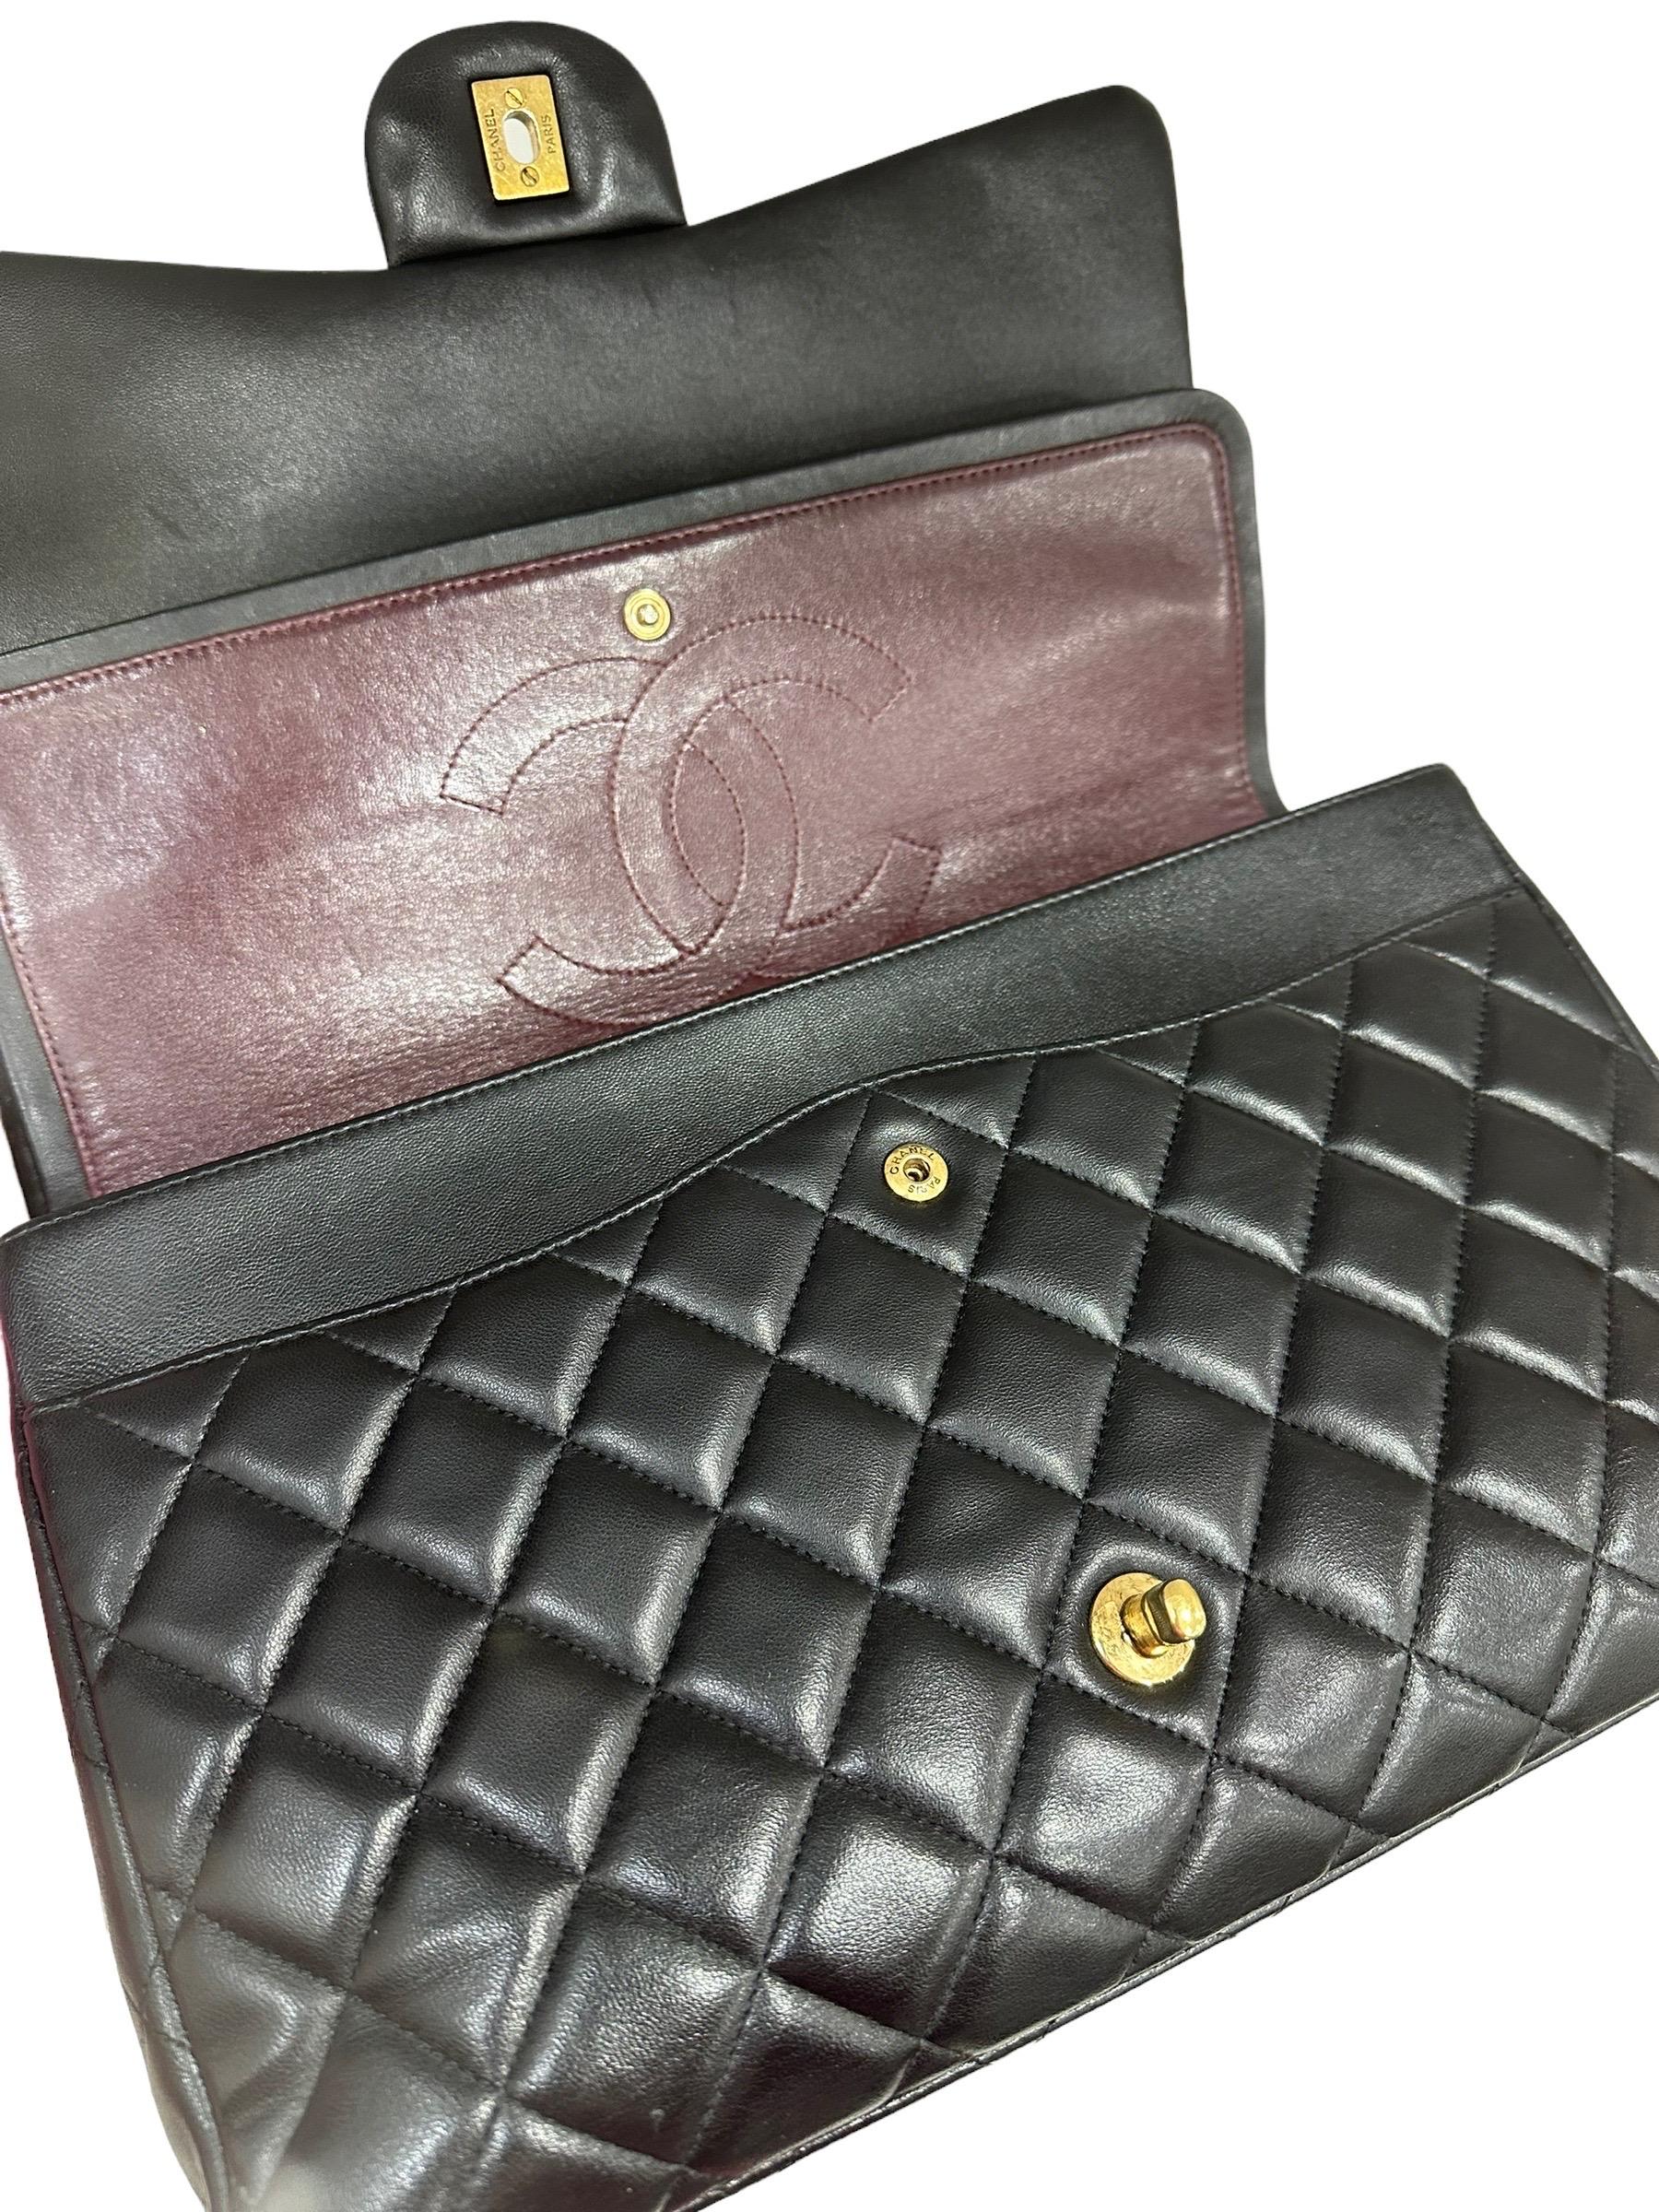 2011 Chanel Timeless Maxi Jumbo Black Leather Top Shoulder Bag For Sale 9